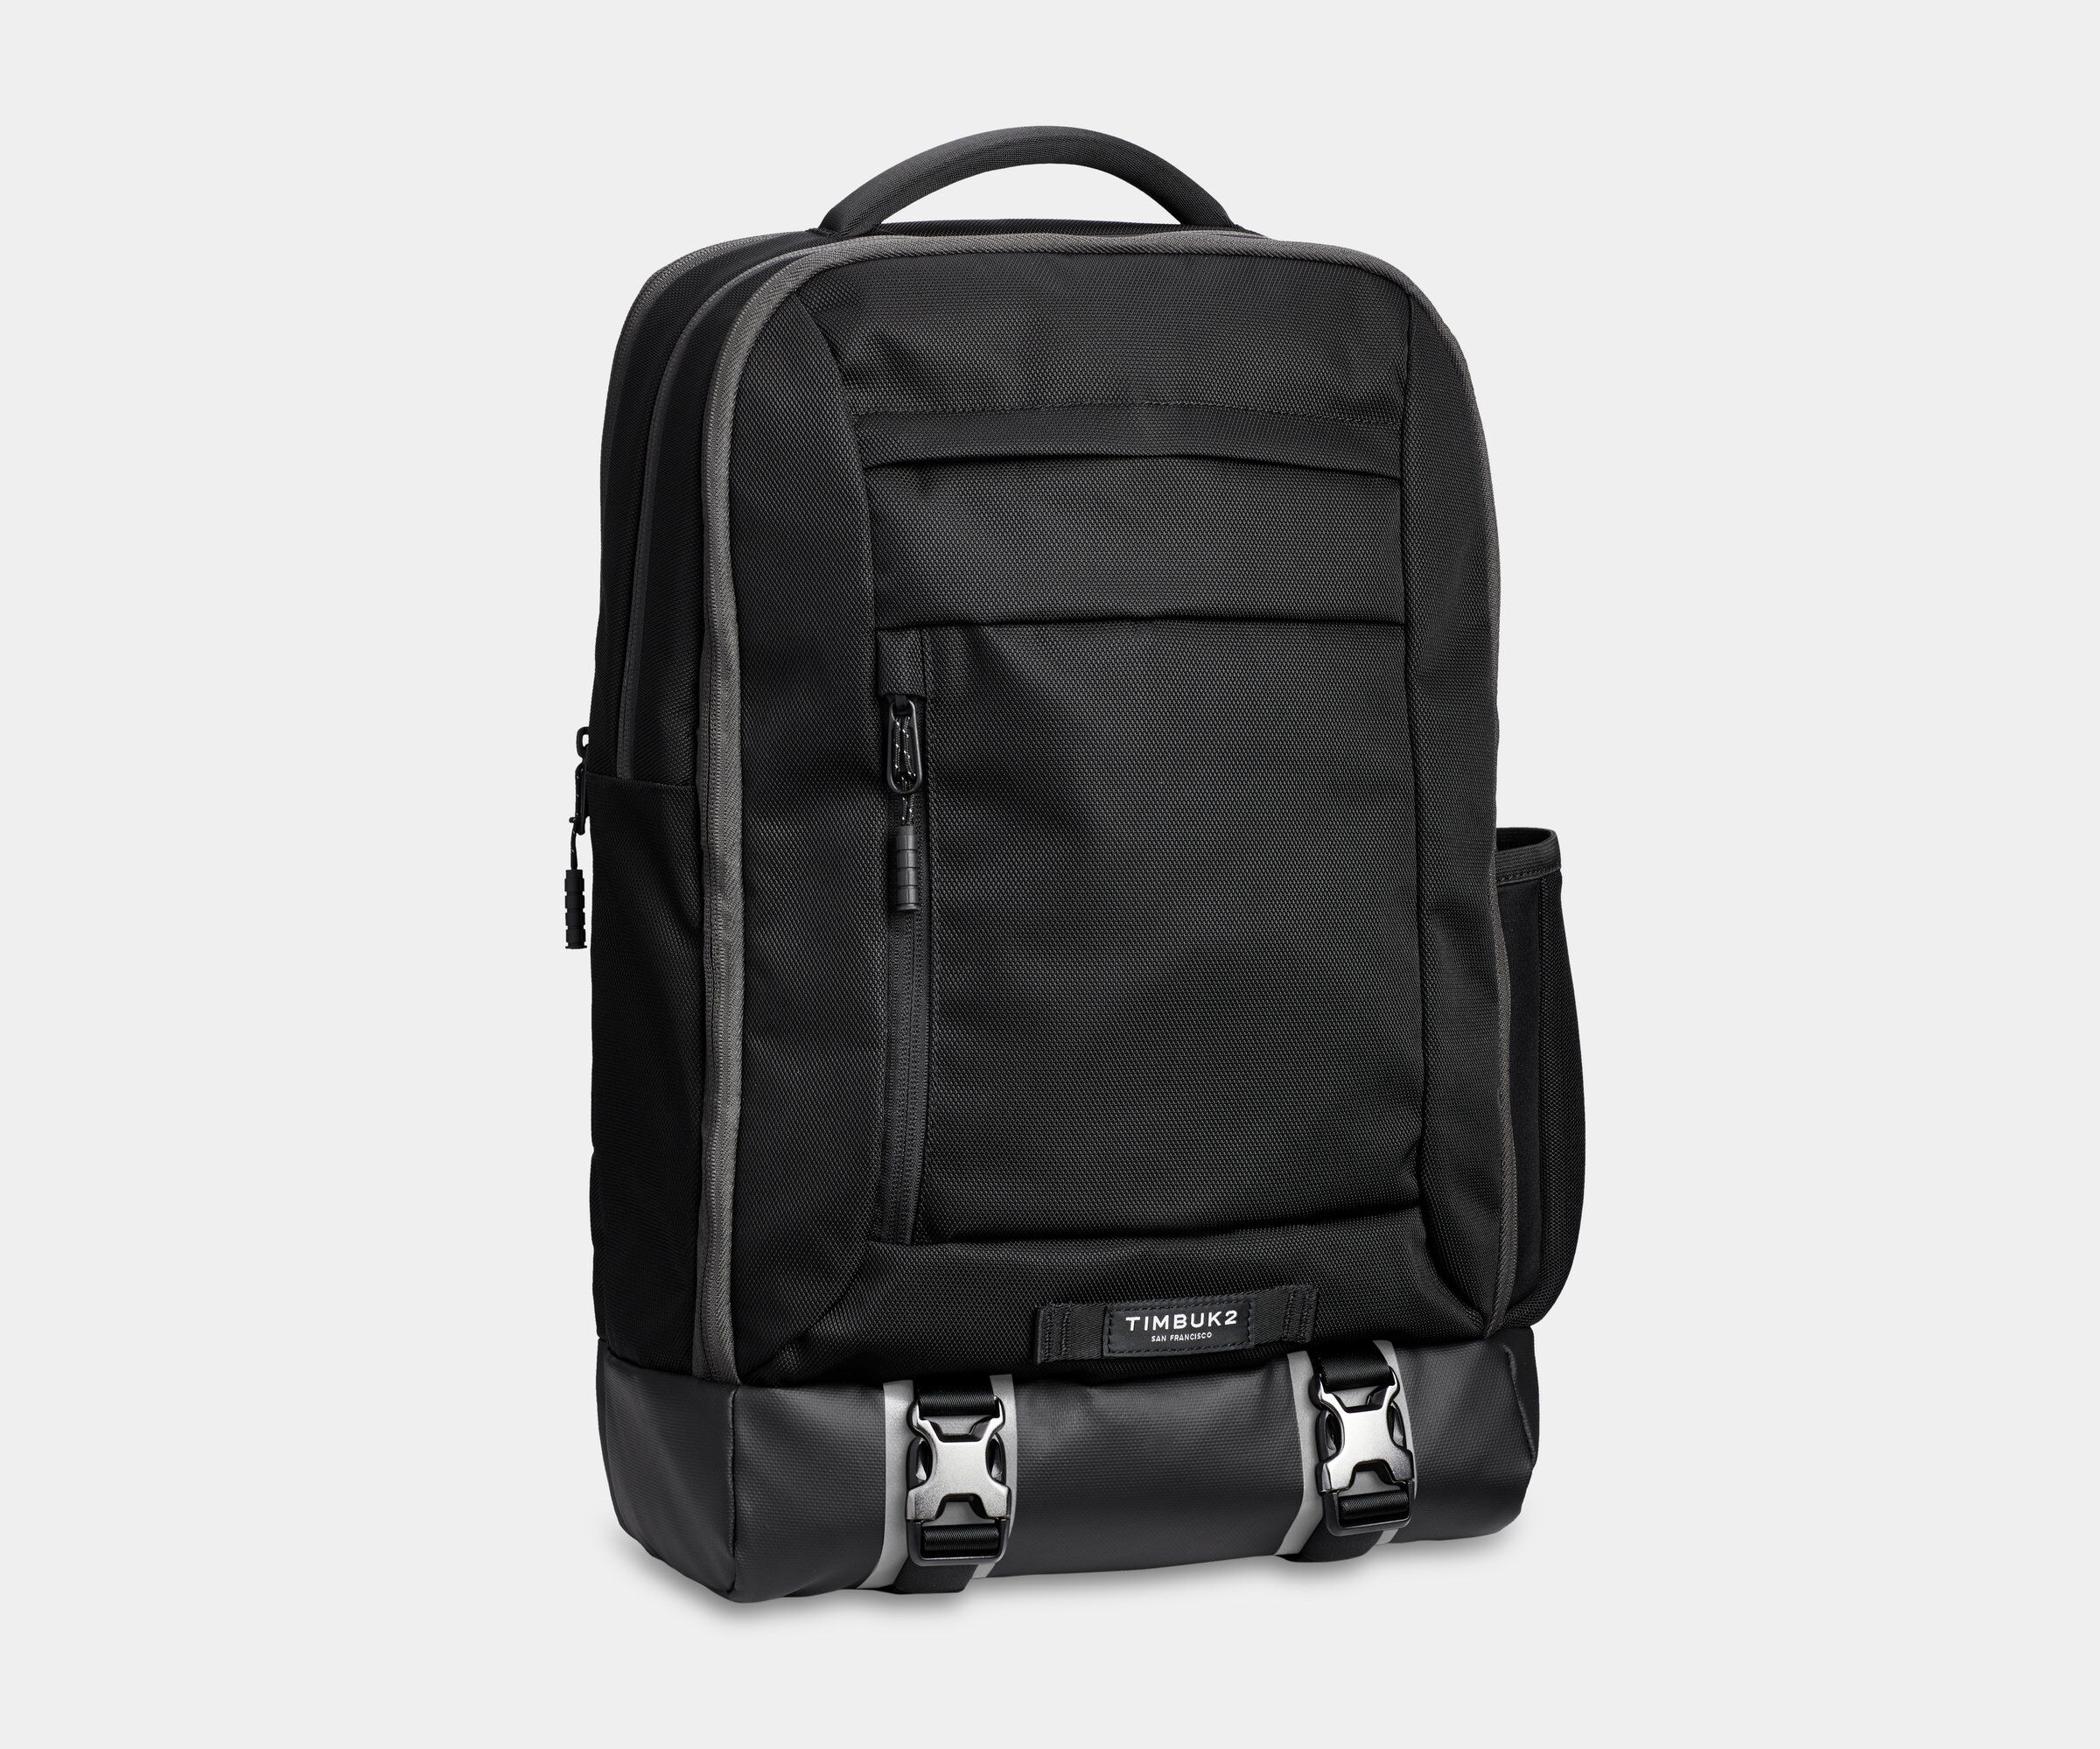 Branded Authority Laptop Backpack Deluxe Black Deluxe